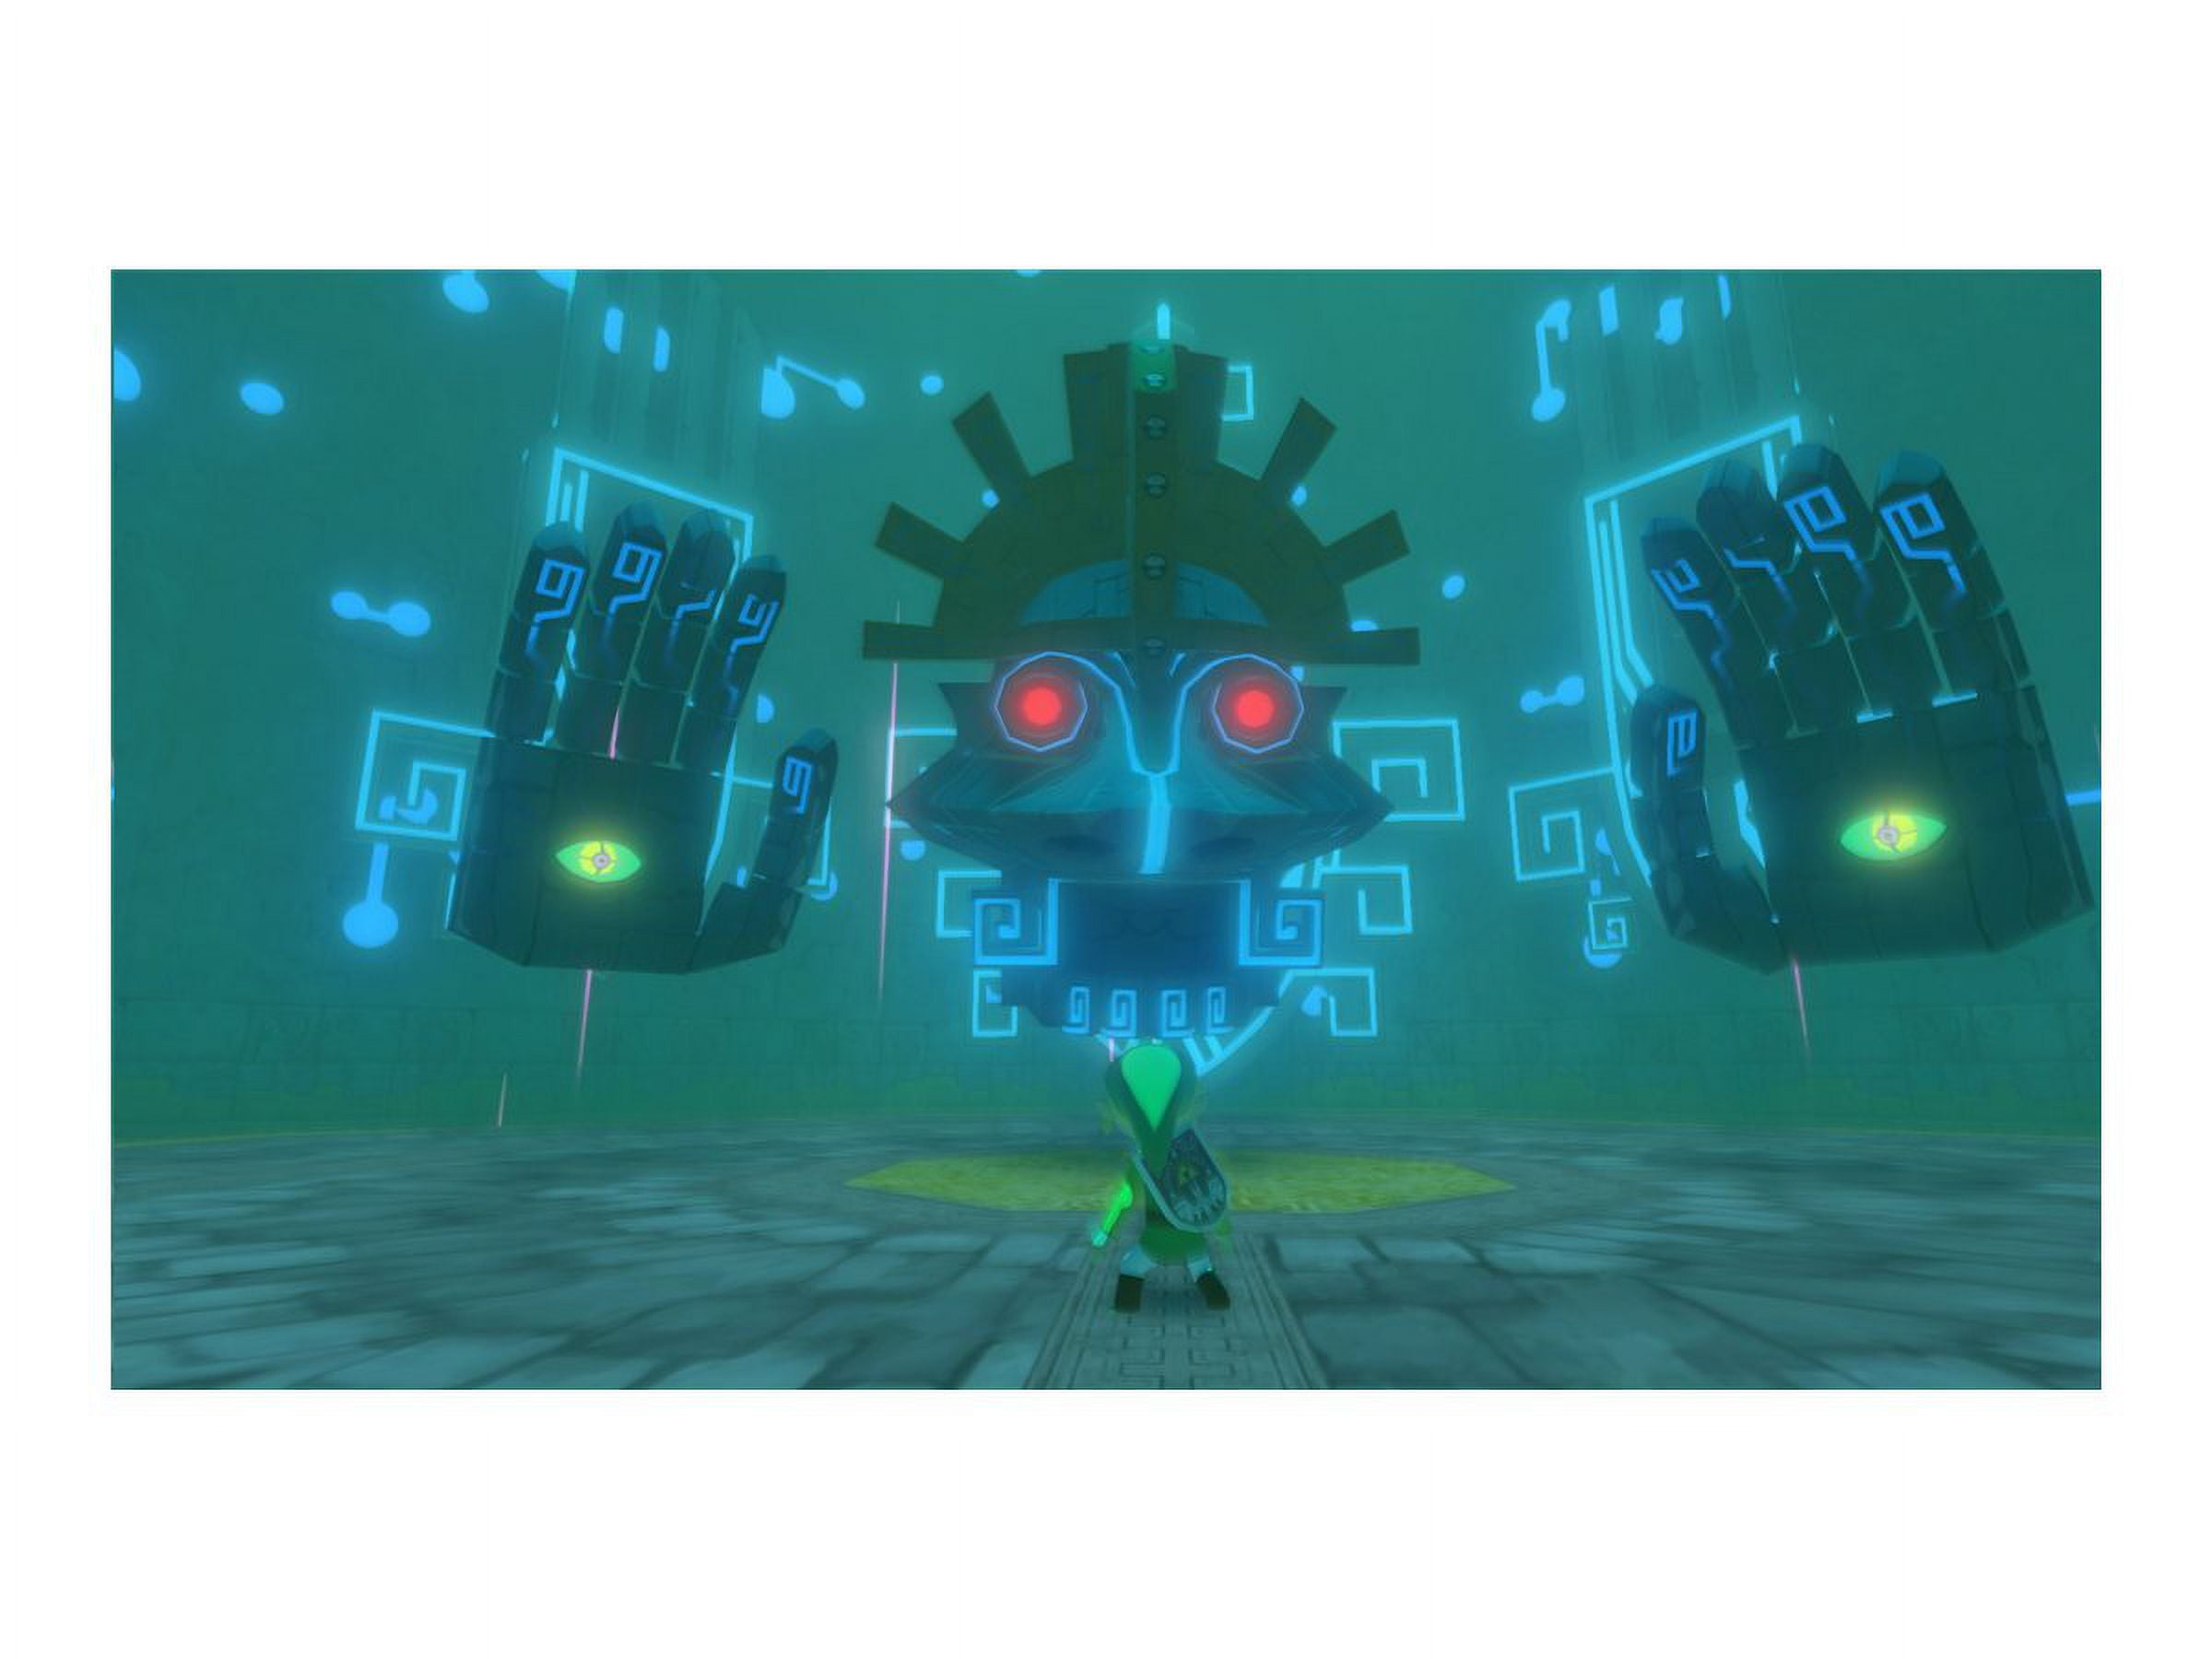 Buy The Legend of Zelda - Kaze no Takuto / Wind Waker (Wii U